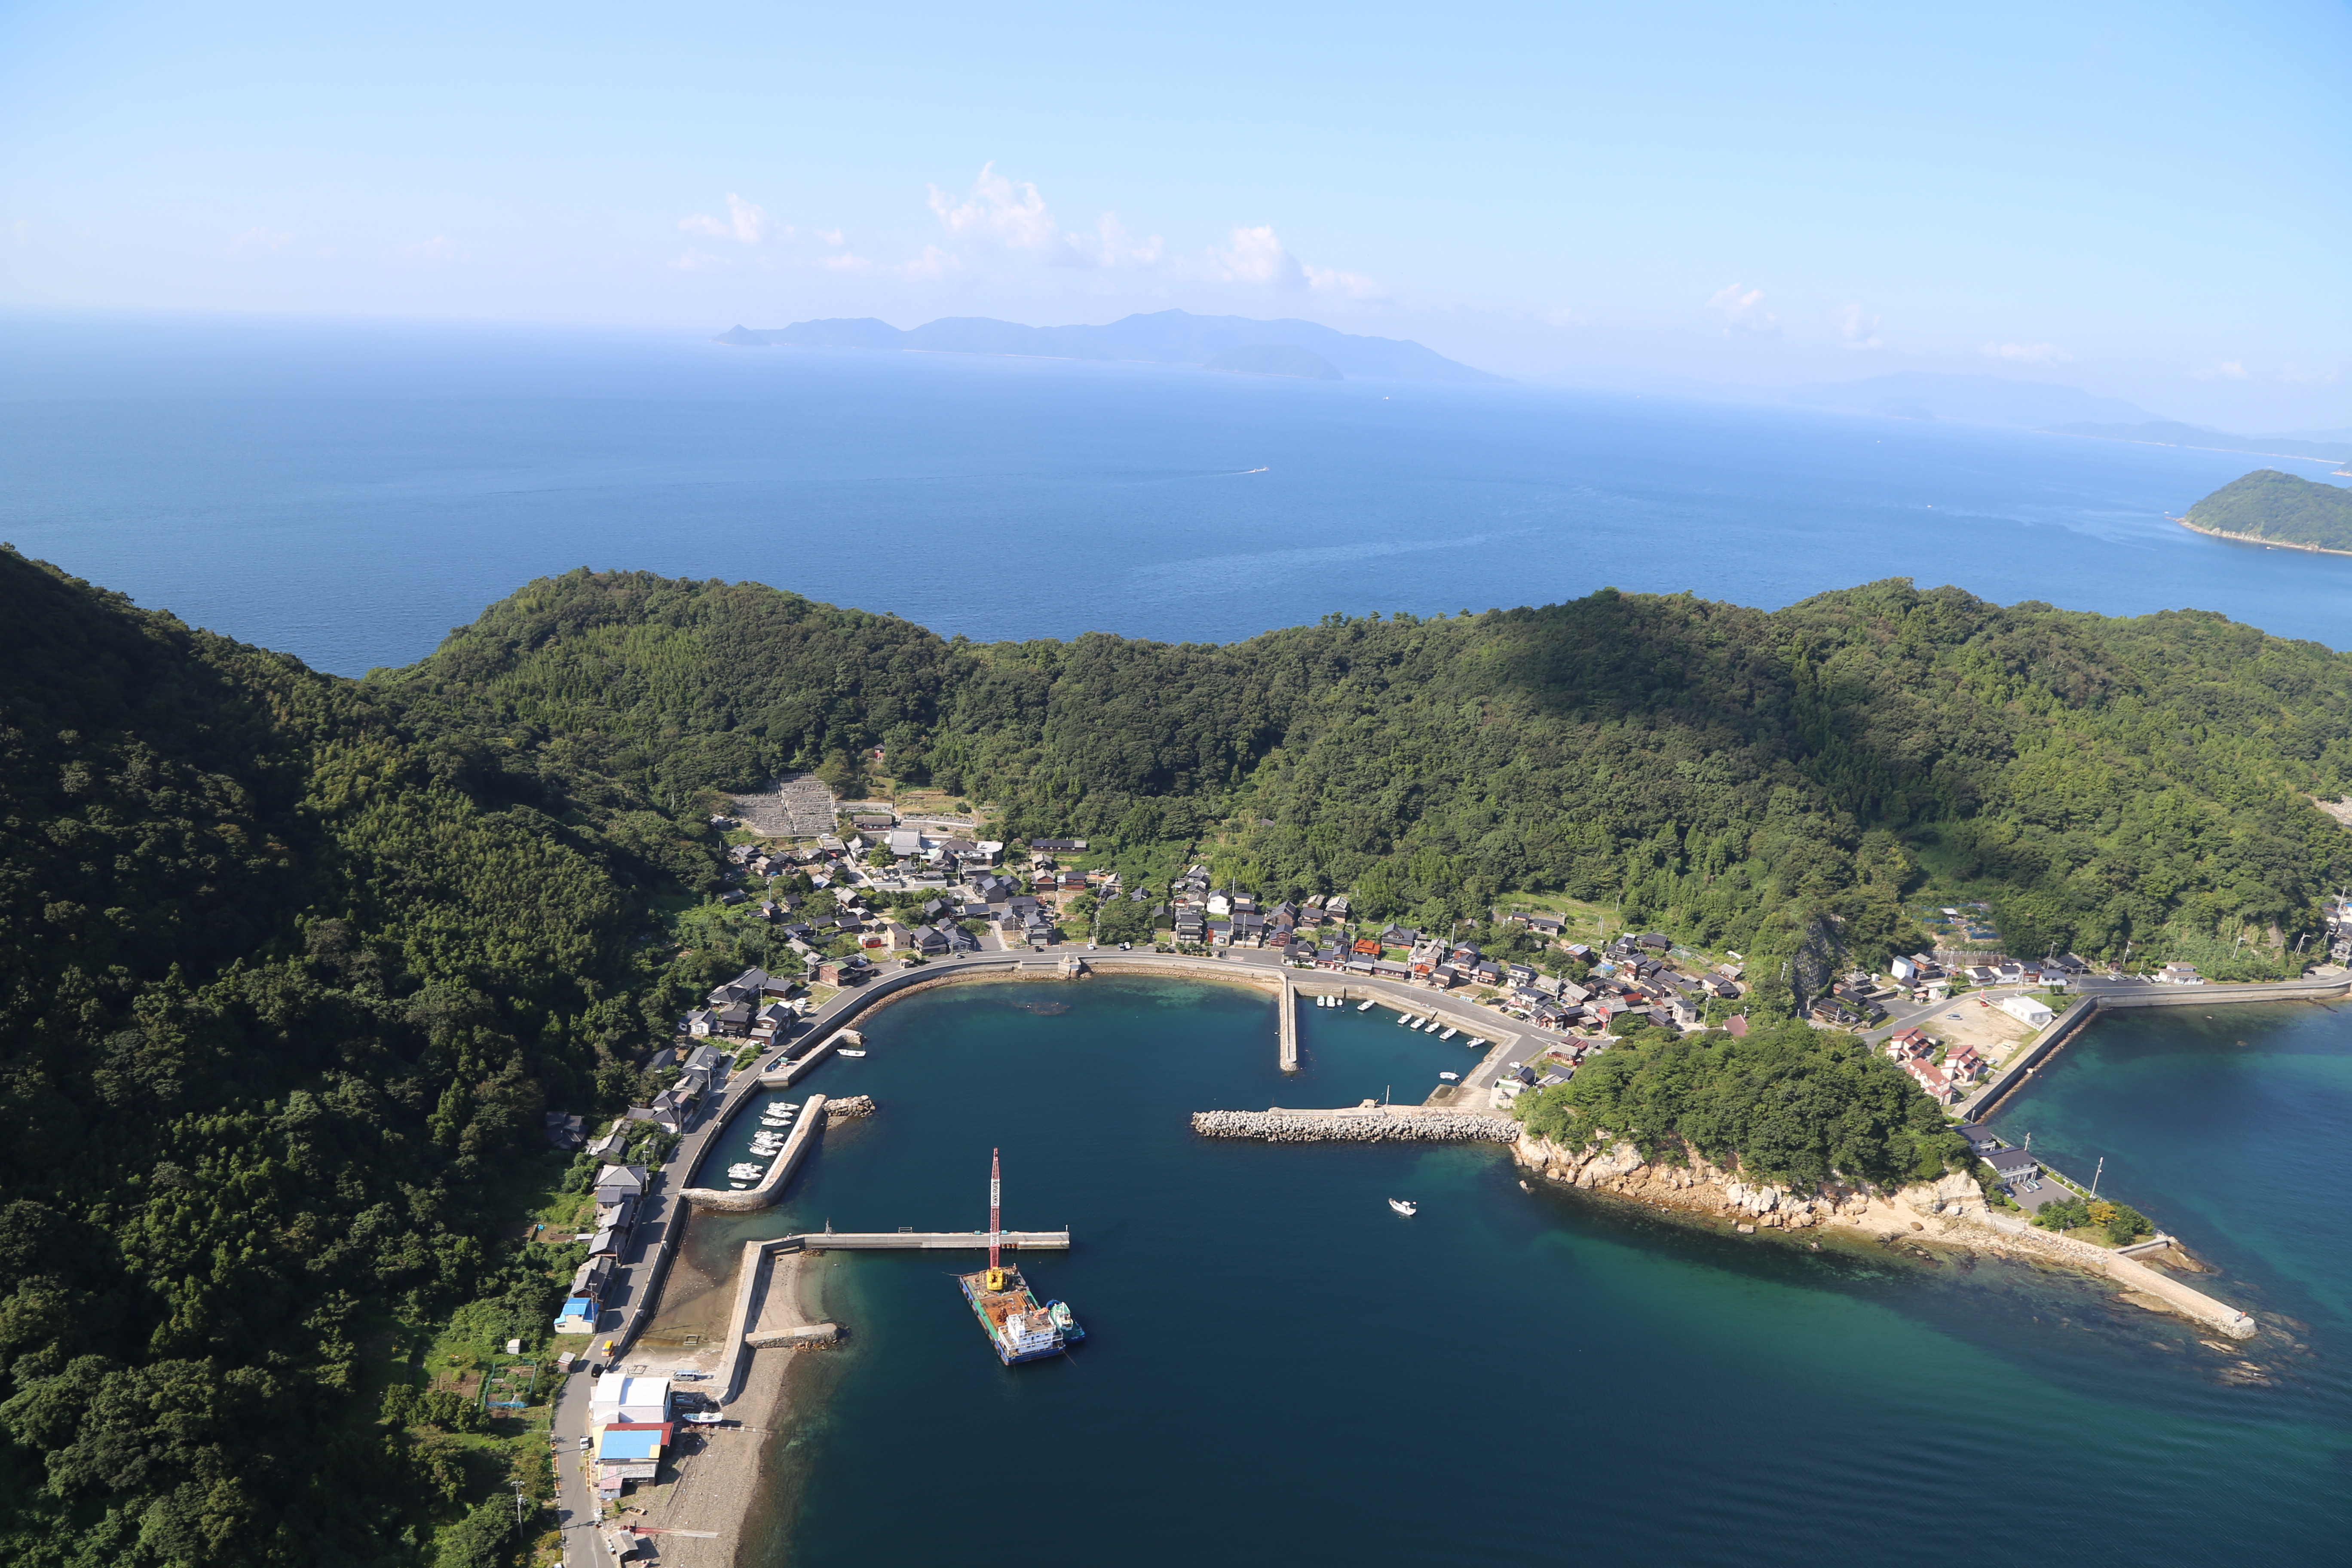 Okikamuro island